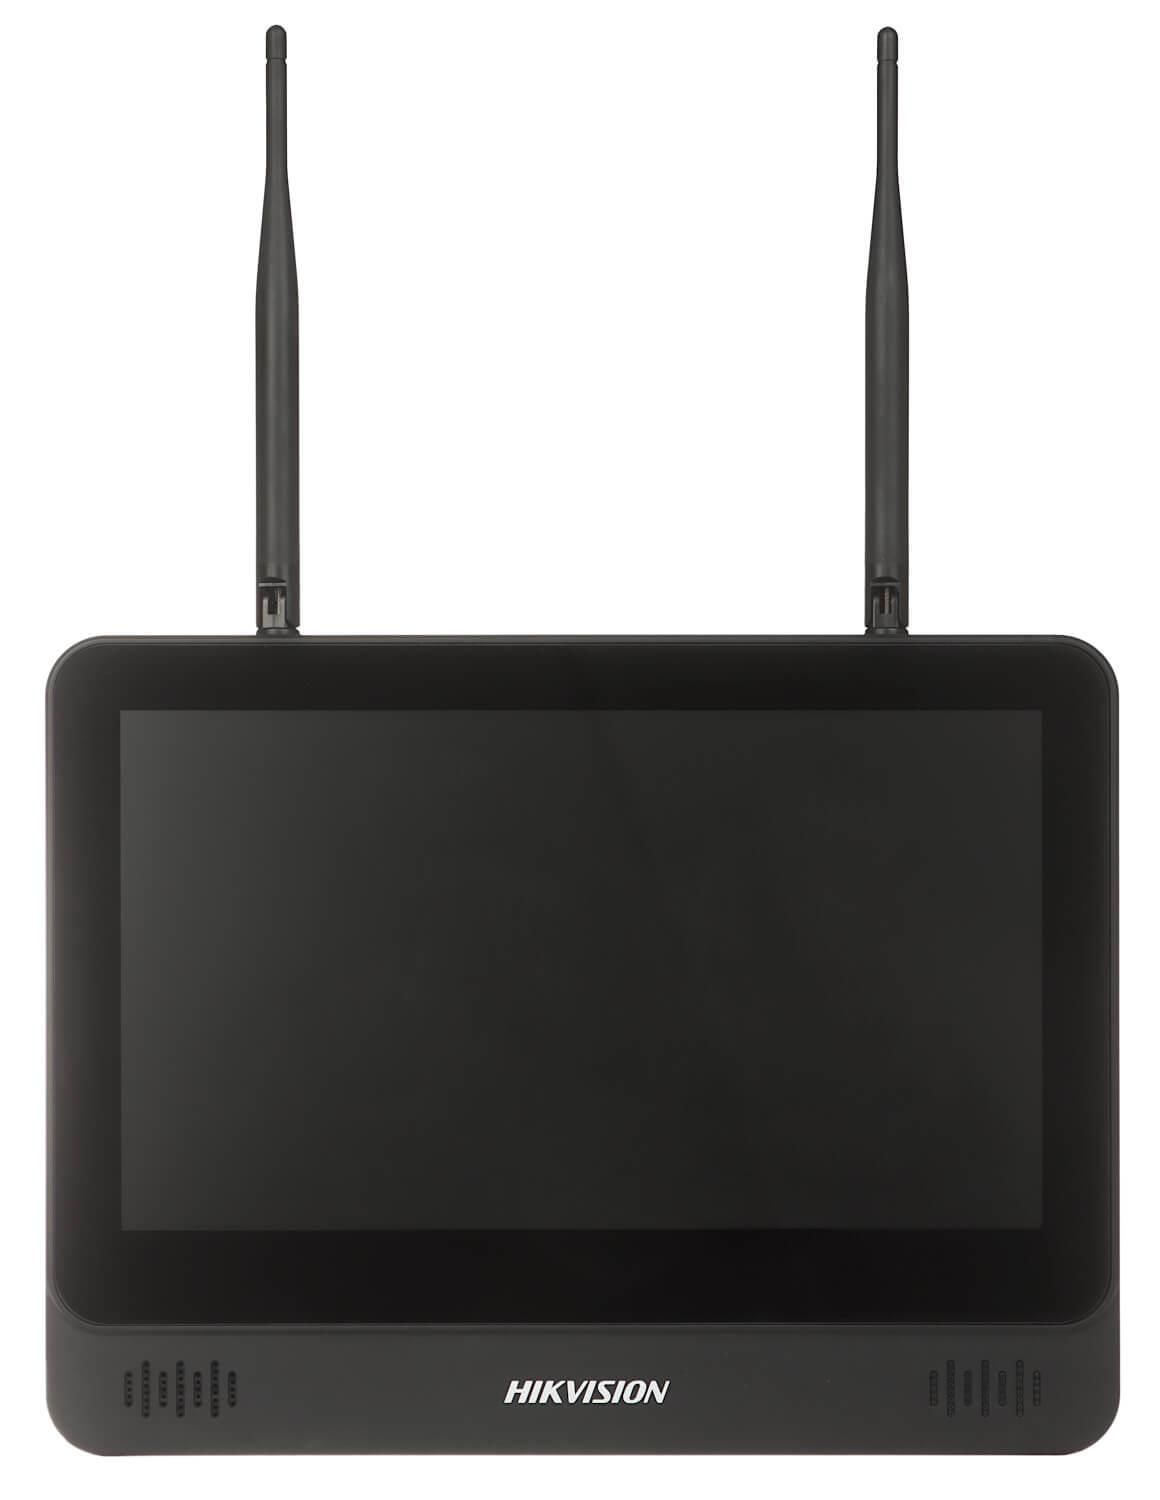 Hikvision DS-7608NI-L1/W 8 Kanal Dahili Monitörlü Wifi Kayıt Cihazı